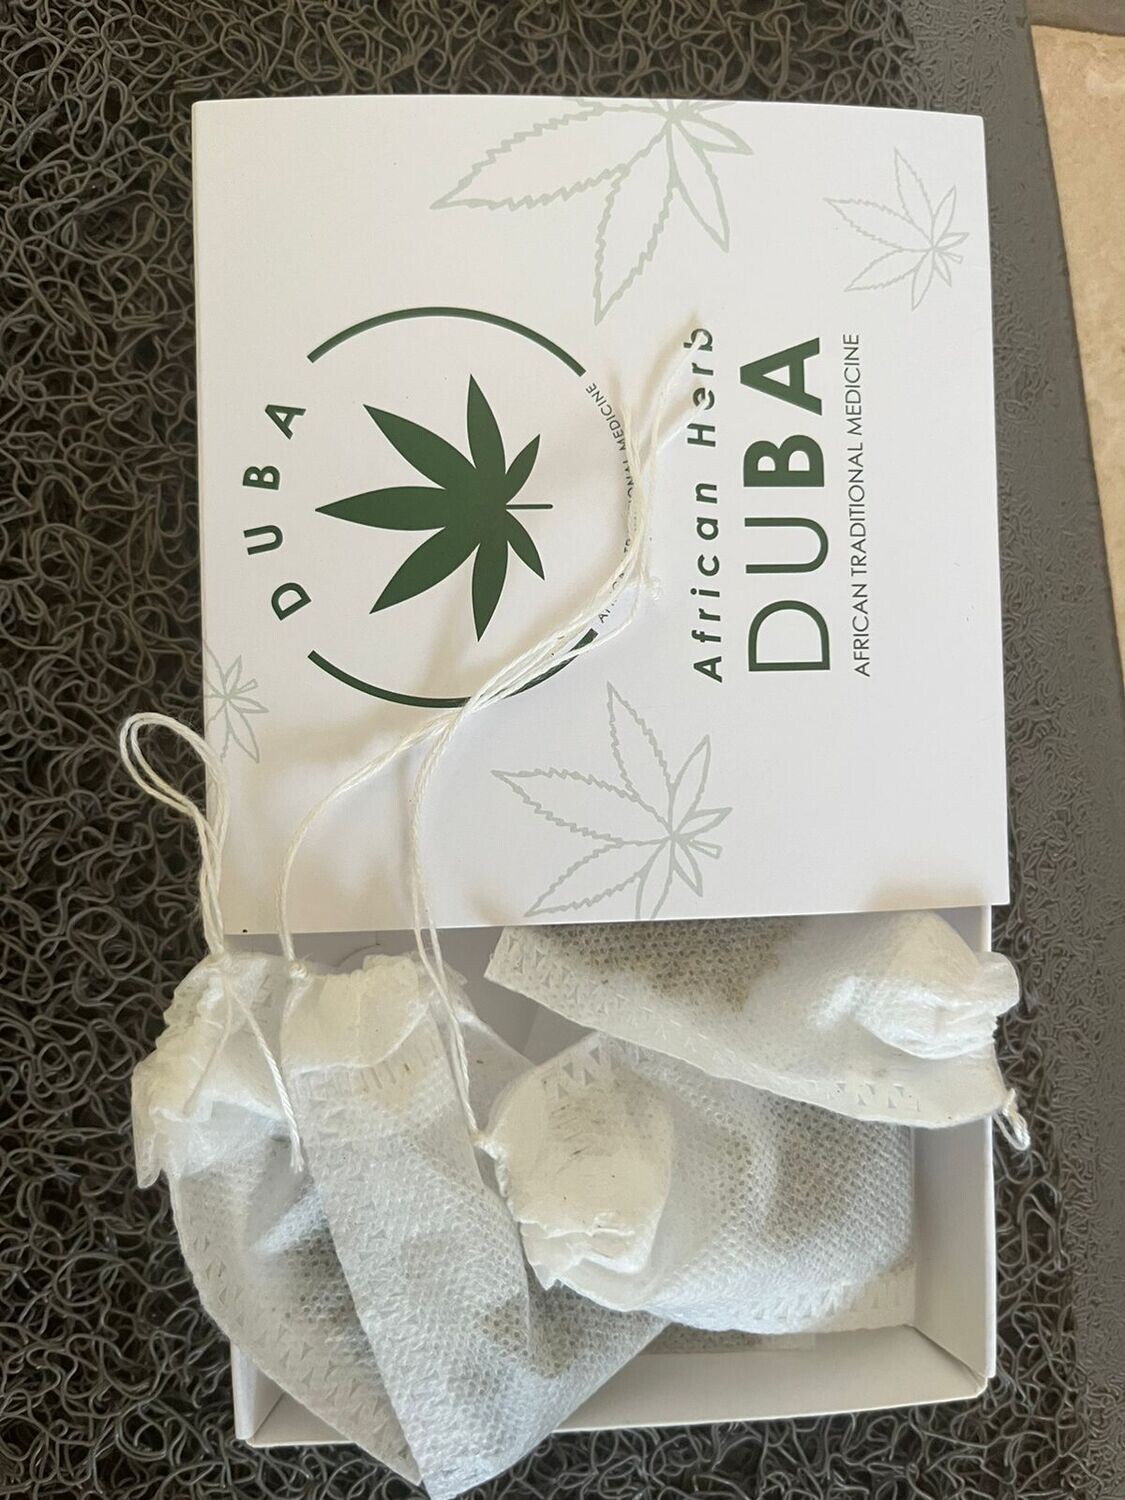 DUBA TEA ( 10 TEA BAGS IN THE PACKET)